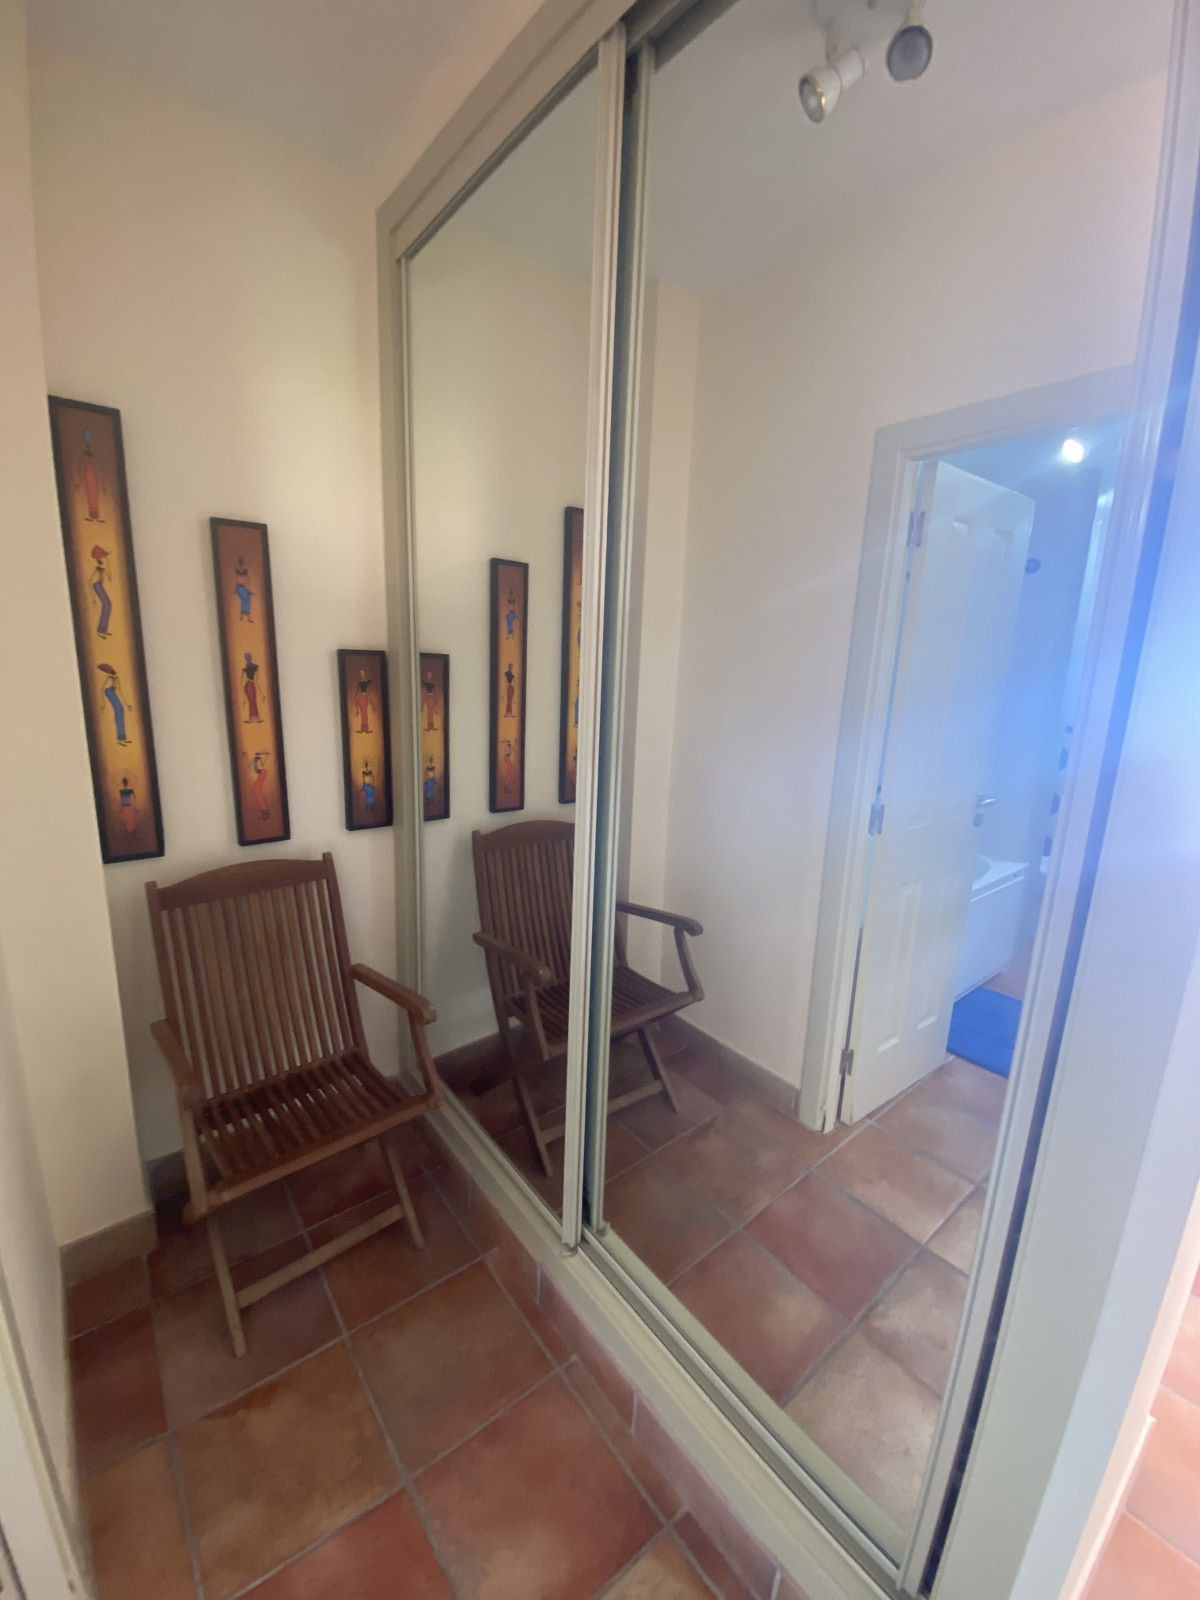 3 bedroom Apartment For Sale in Benalmadena, Málaga - thumb 18